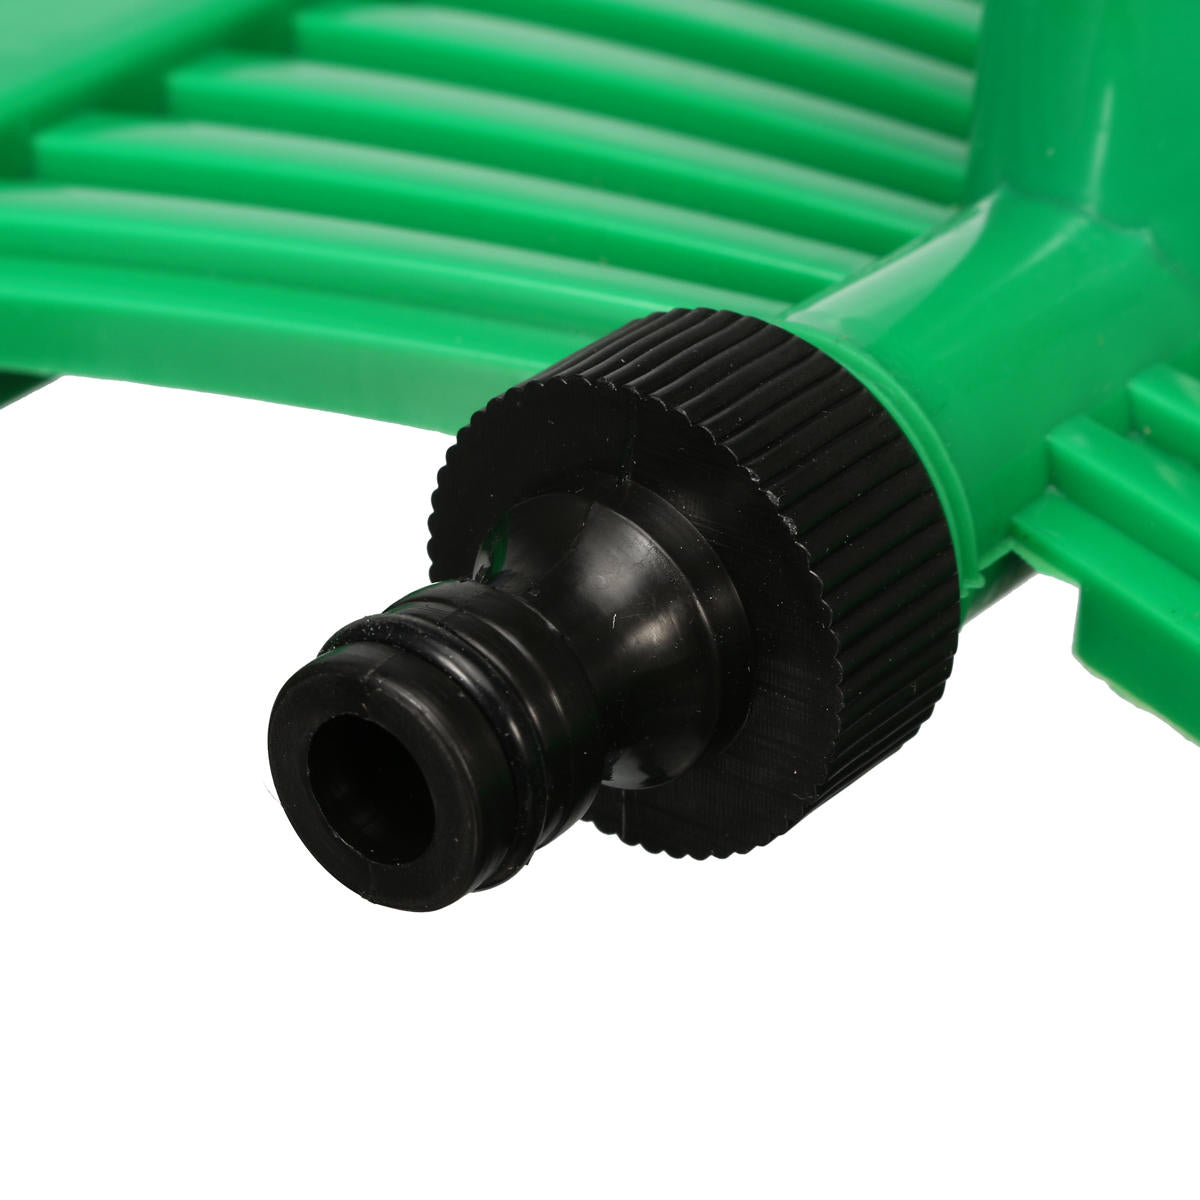 h basis plastic auto roterende gazon sprinkler tuin gazon plant gras watering tool